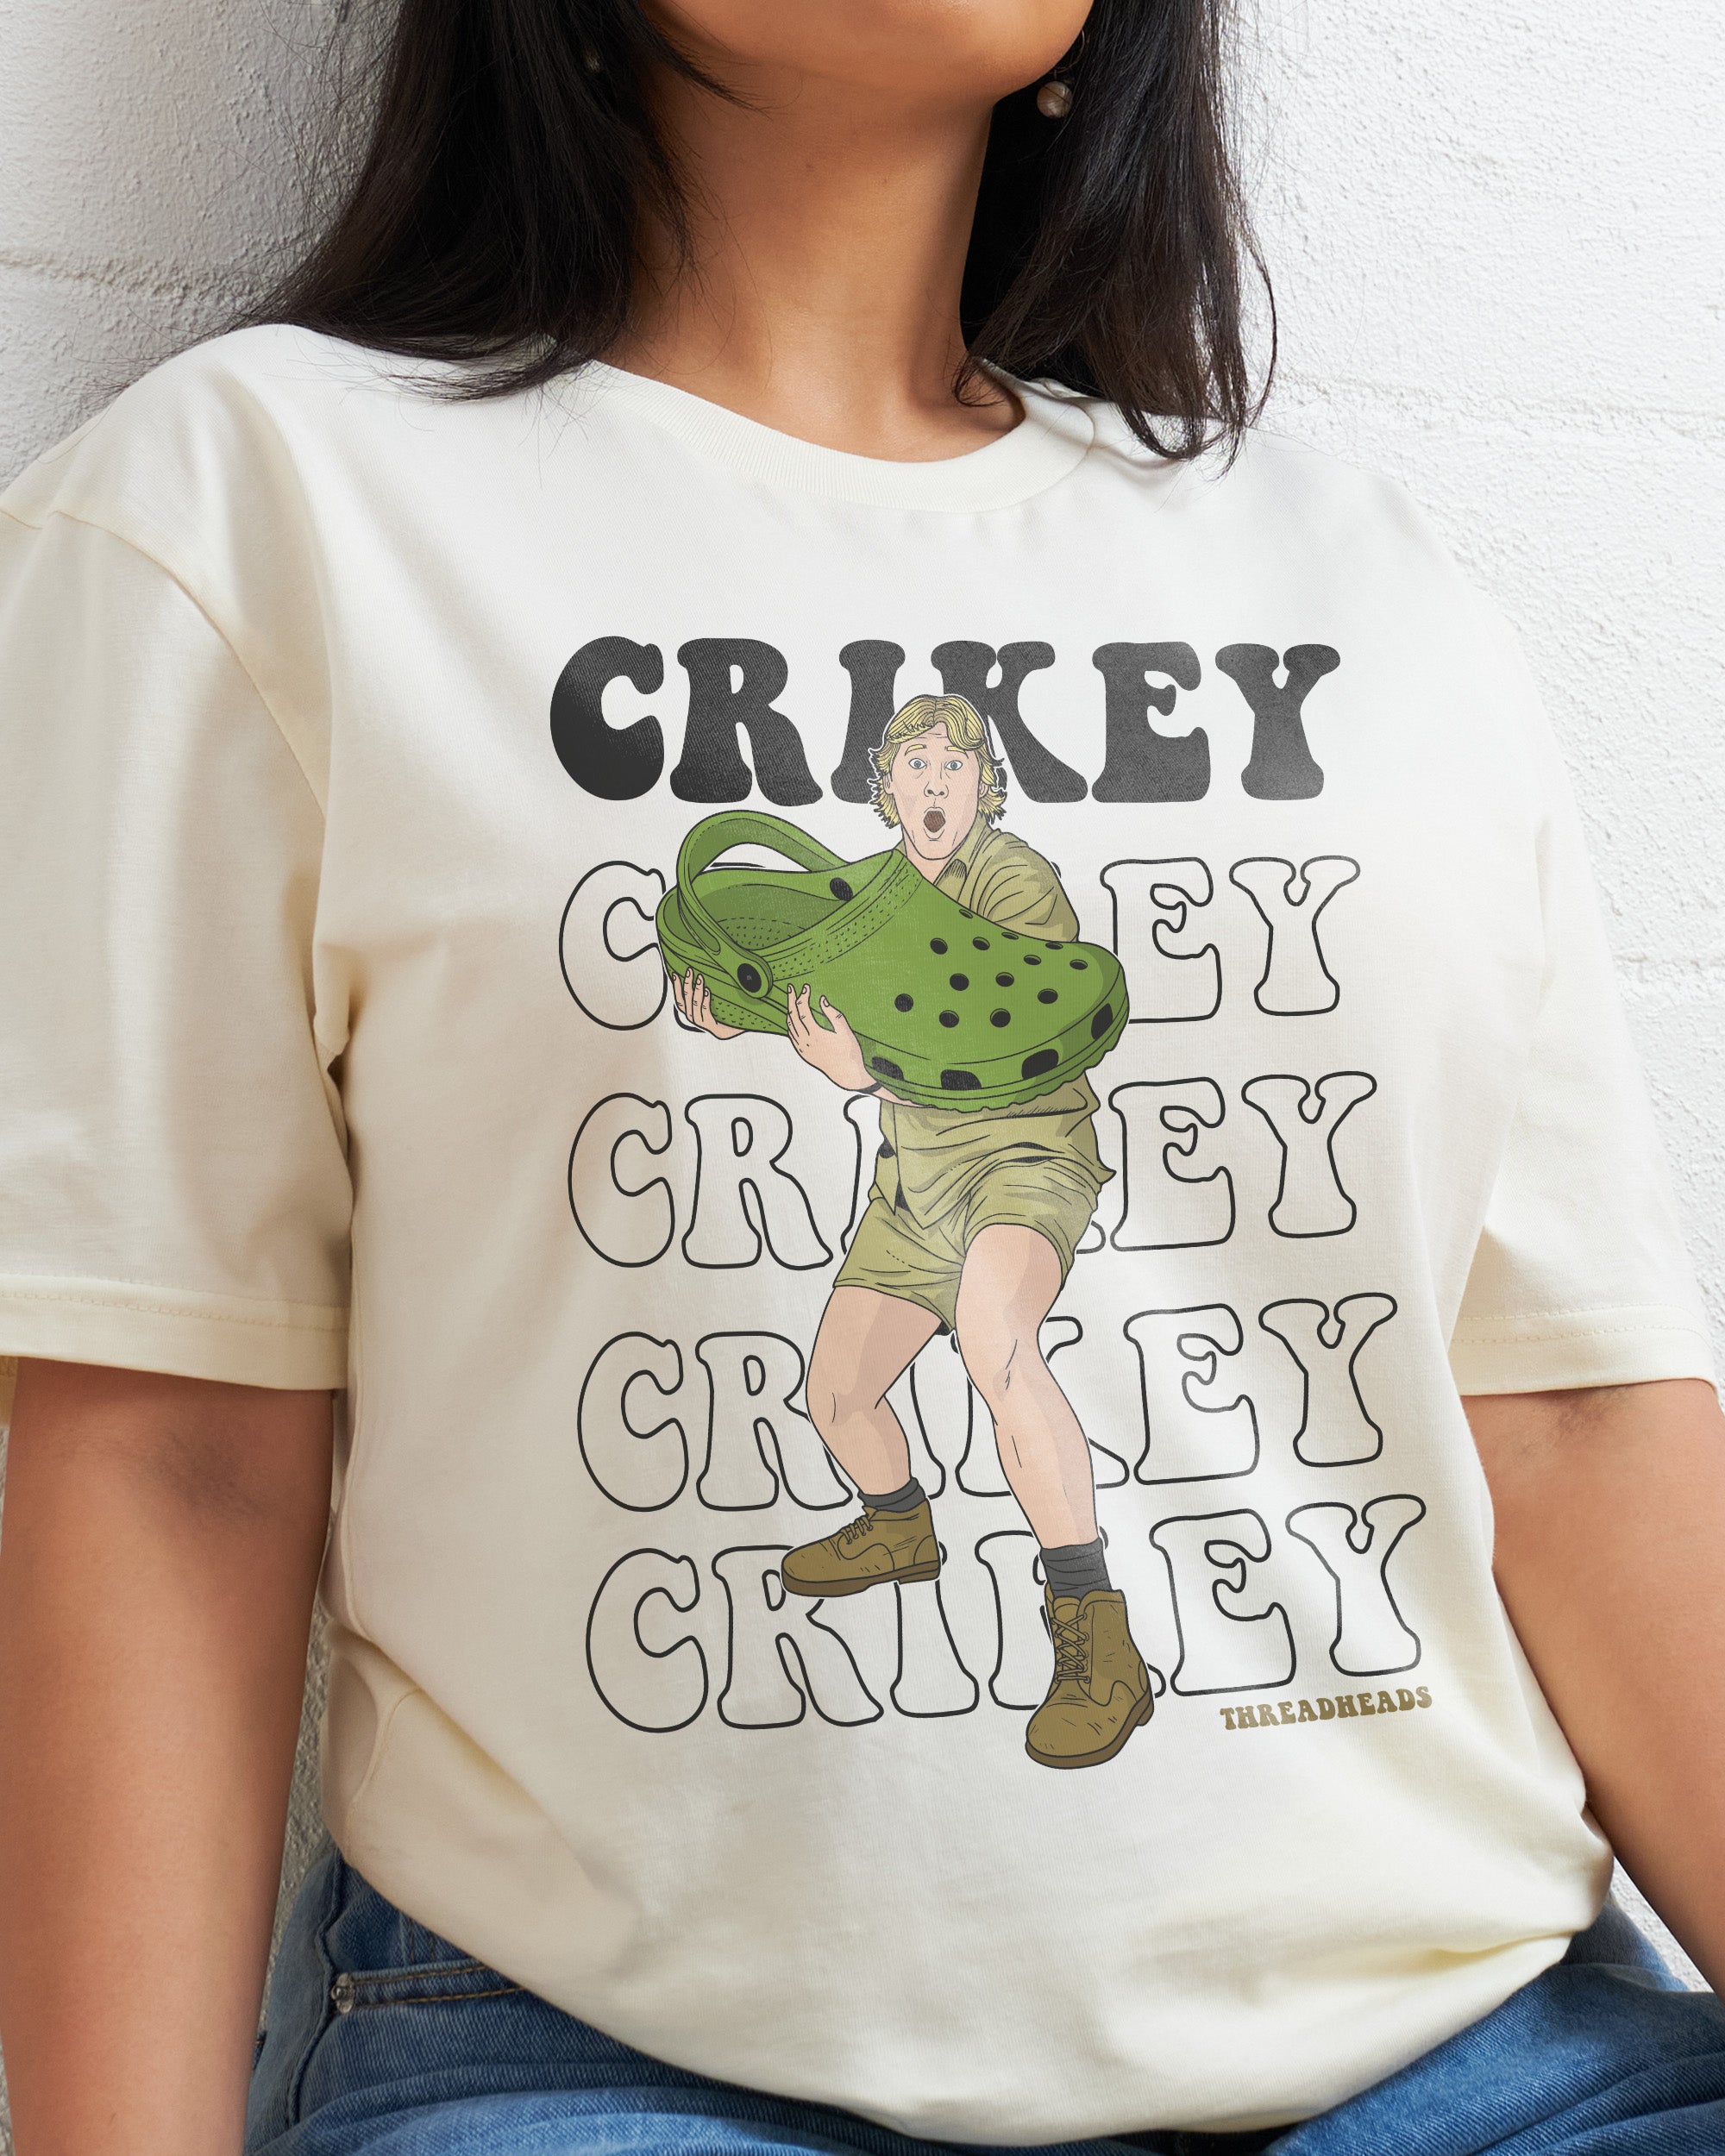 Crikey T-Shirt Australia Online